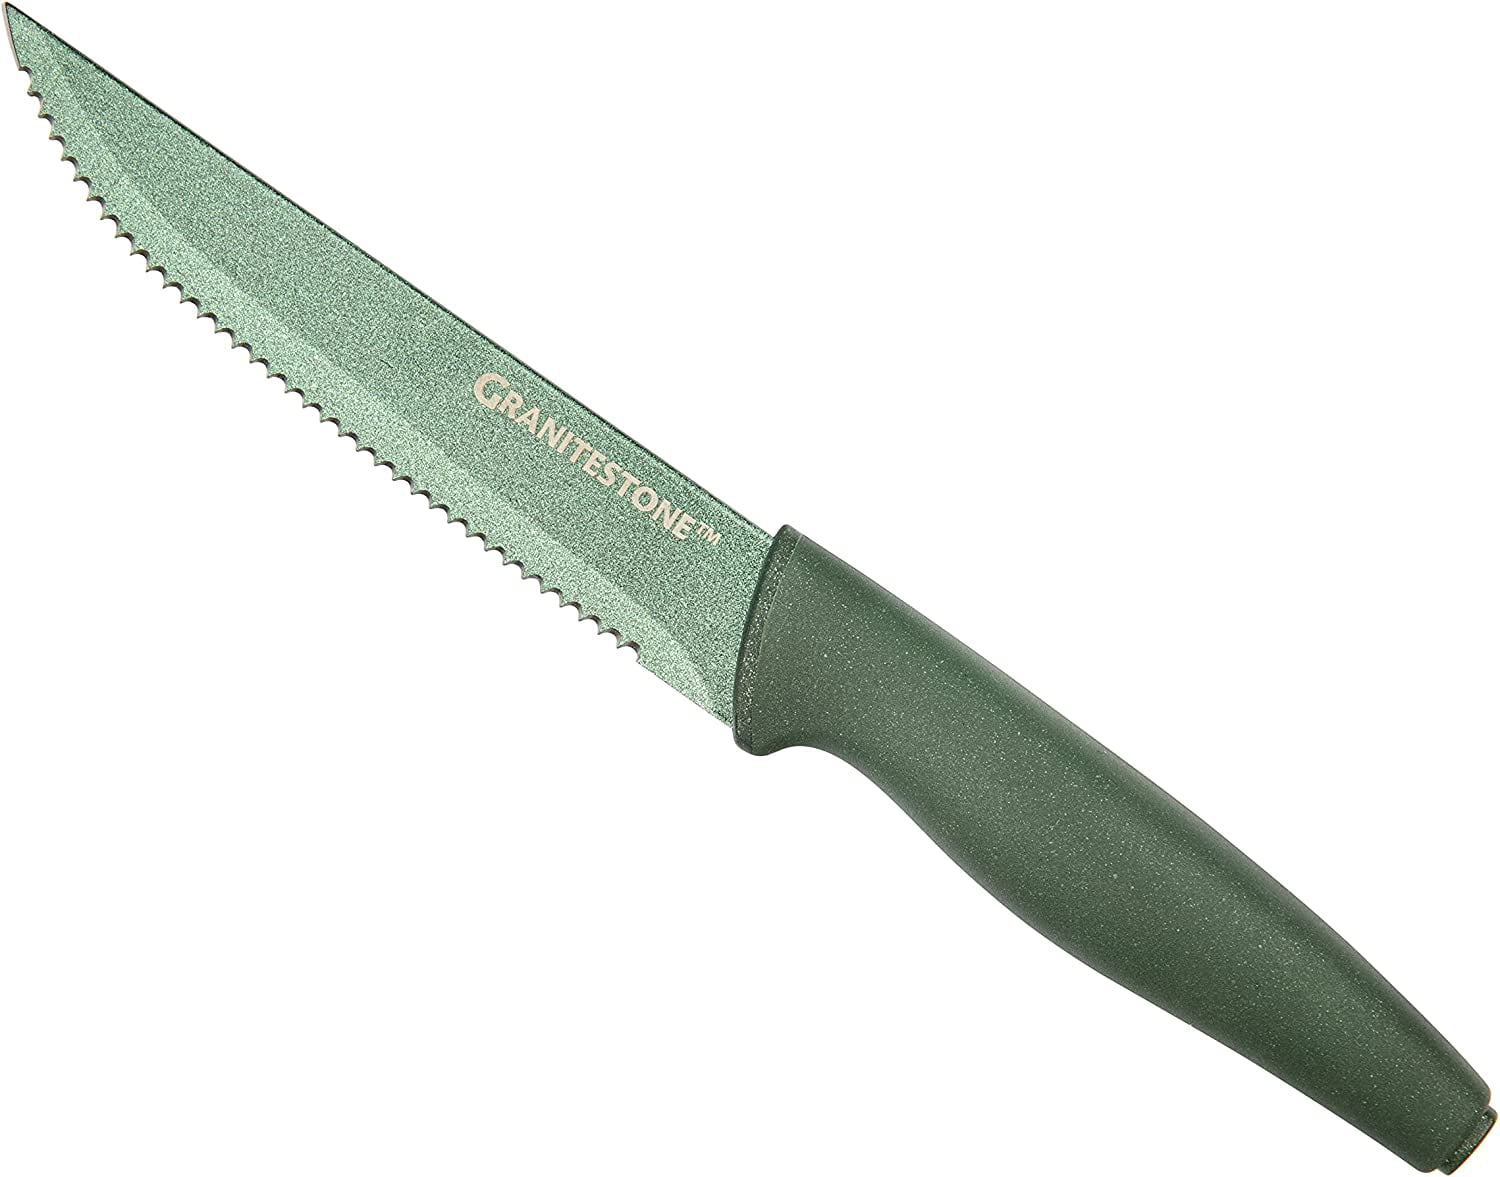 Granitestone NutriBlade 6pc Knives Set for Sale in Simi Valley, CA - OfferUp